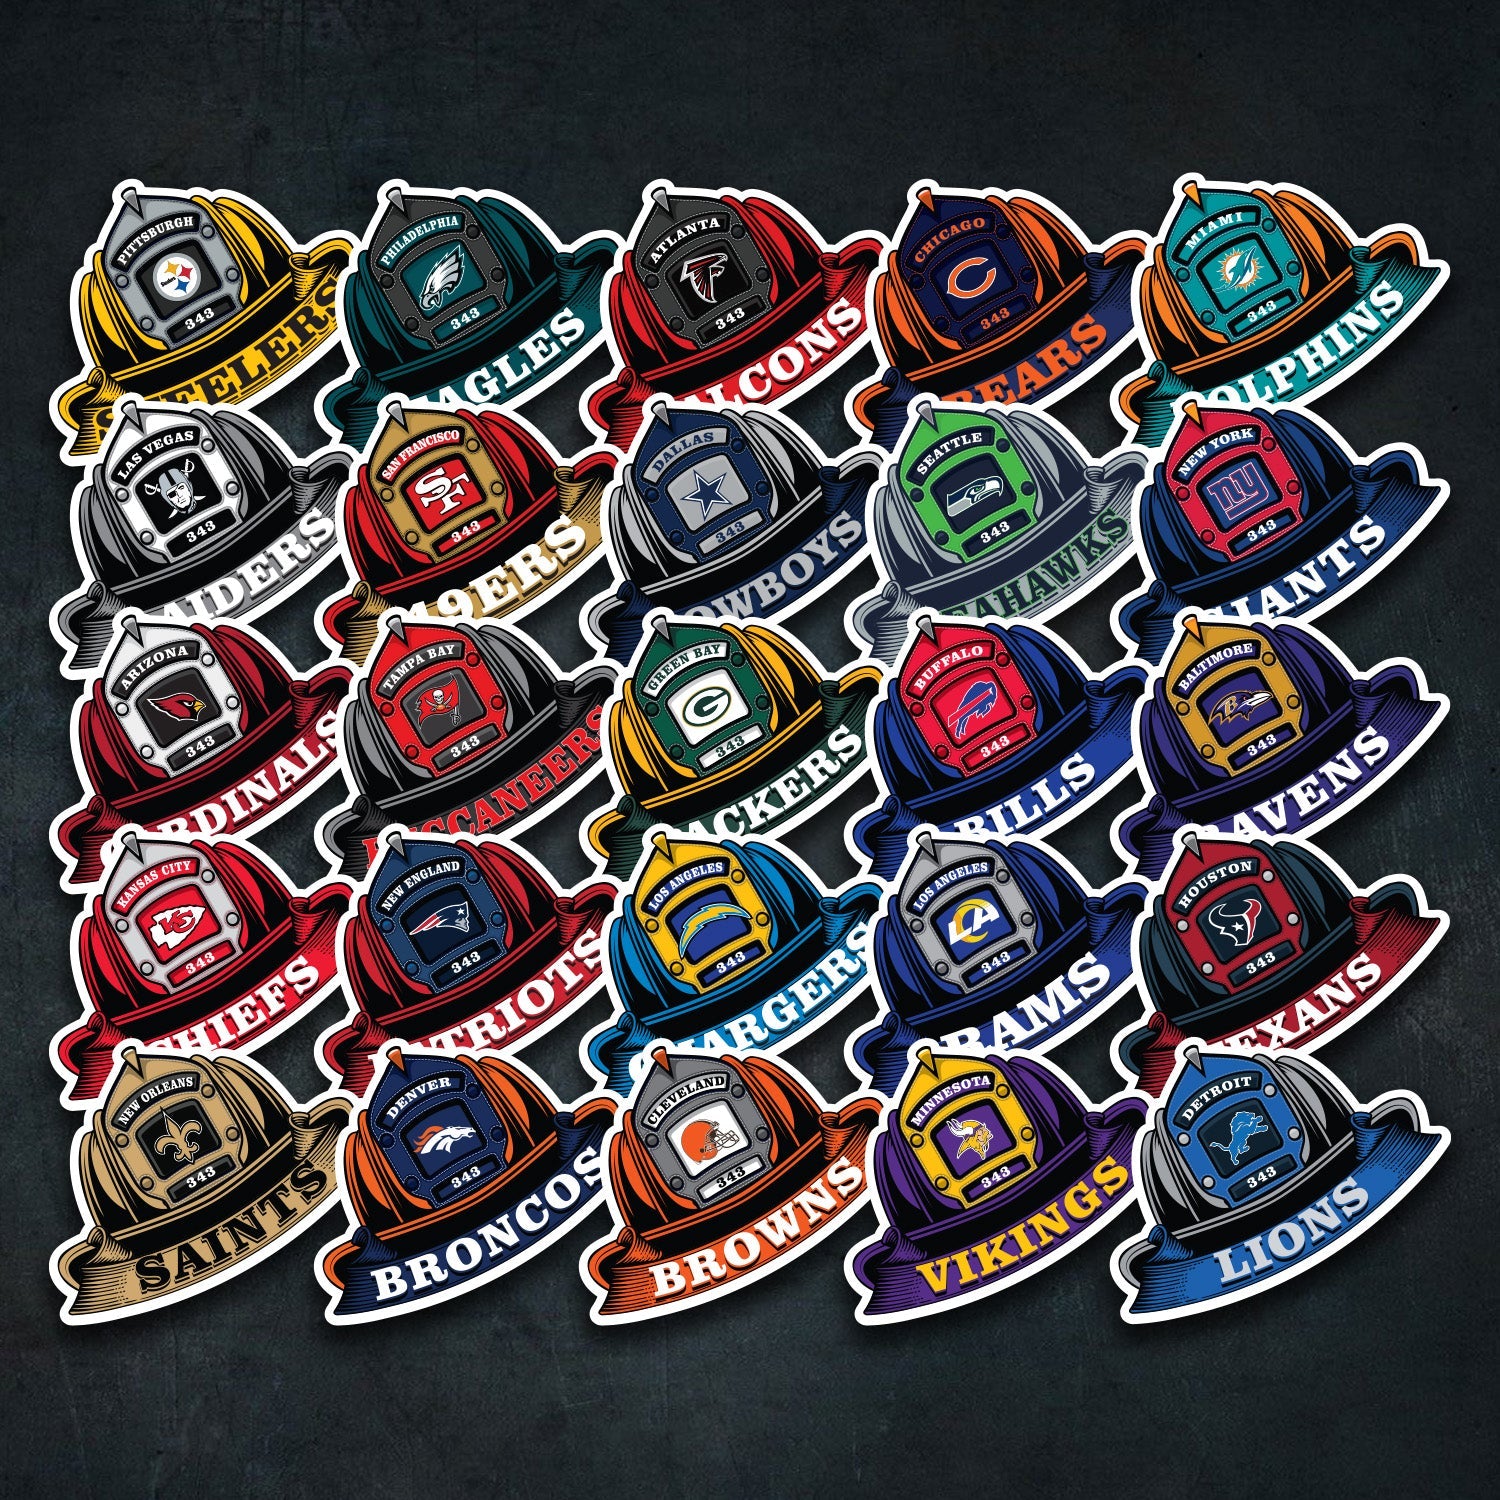 NFL Fire Helmet Stickers - 3 Pack